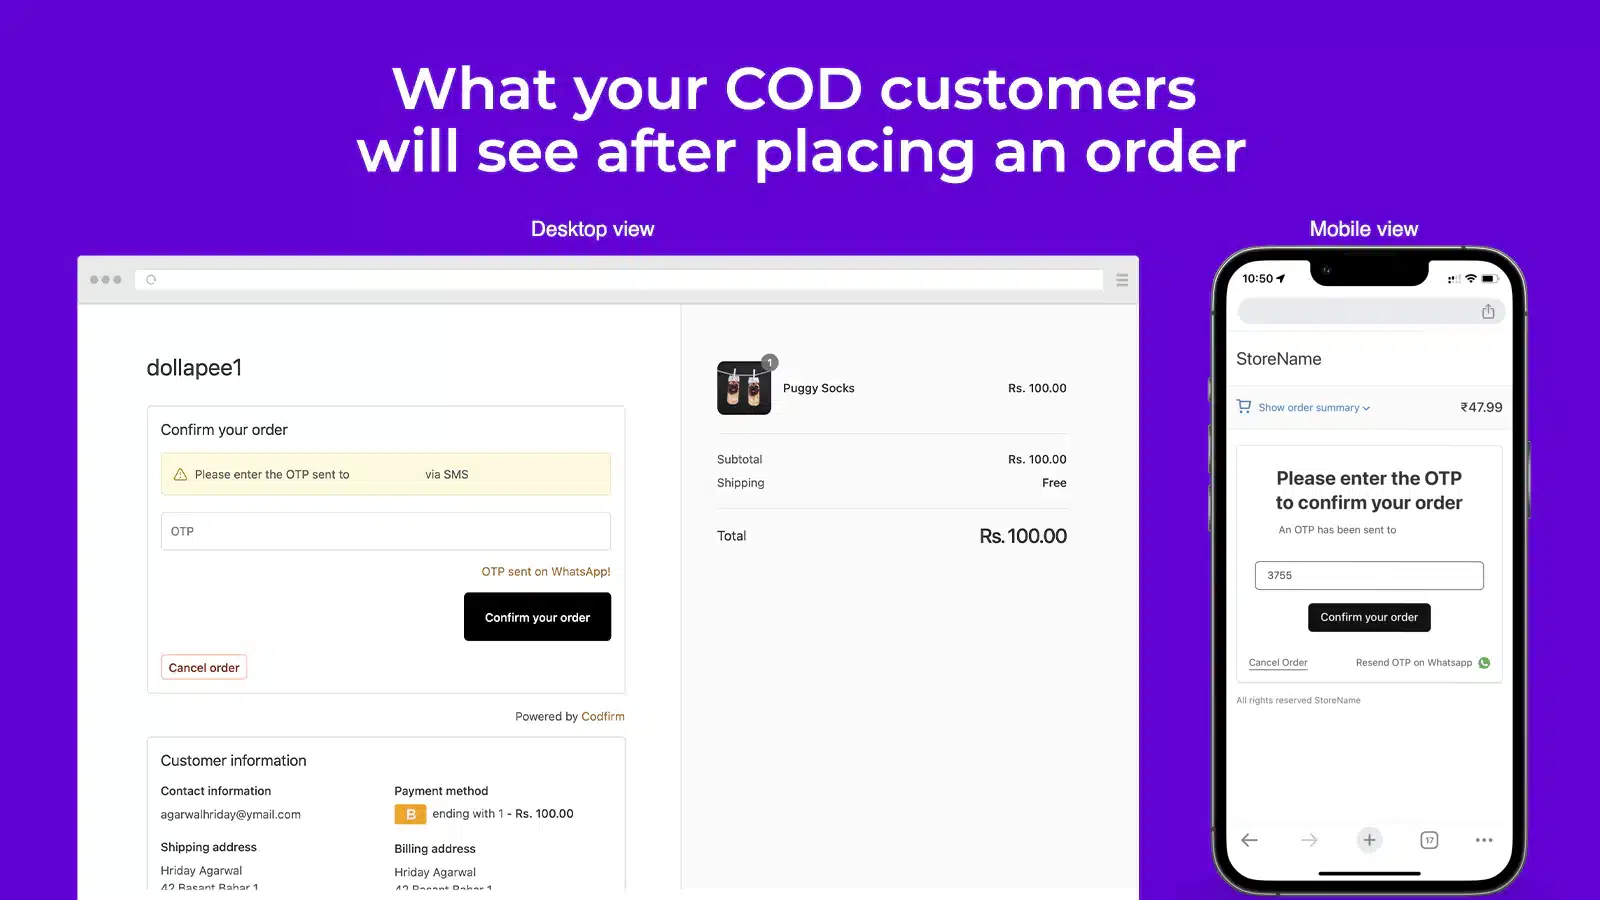 codfirm-cod-verification-suite-app-confirm-order